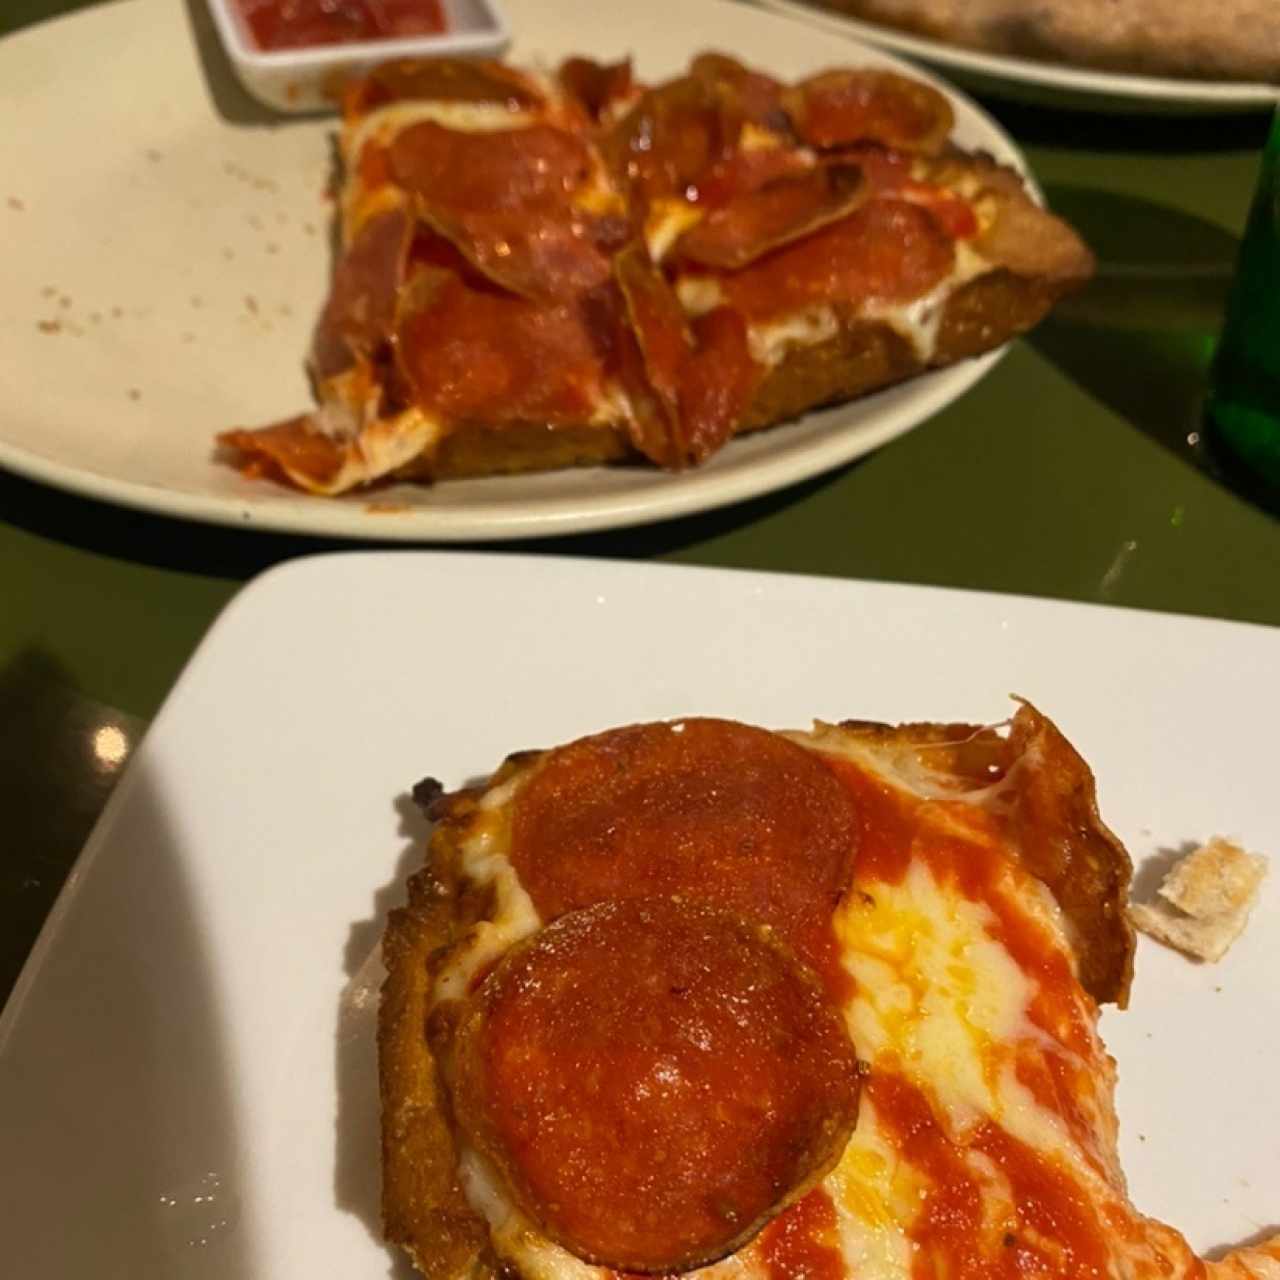 Pizza 14